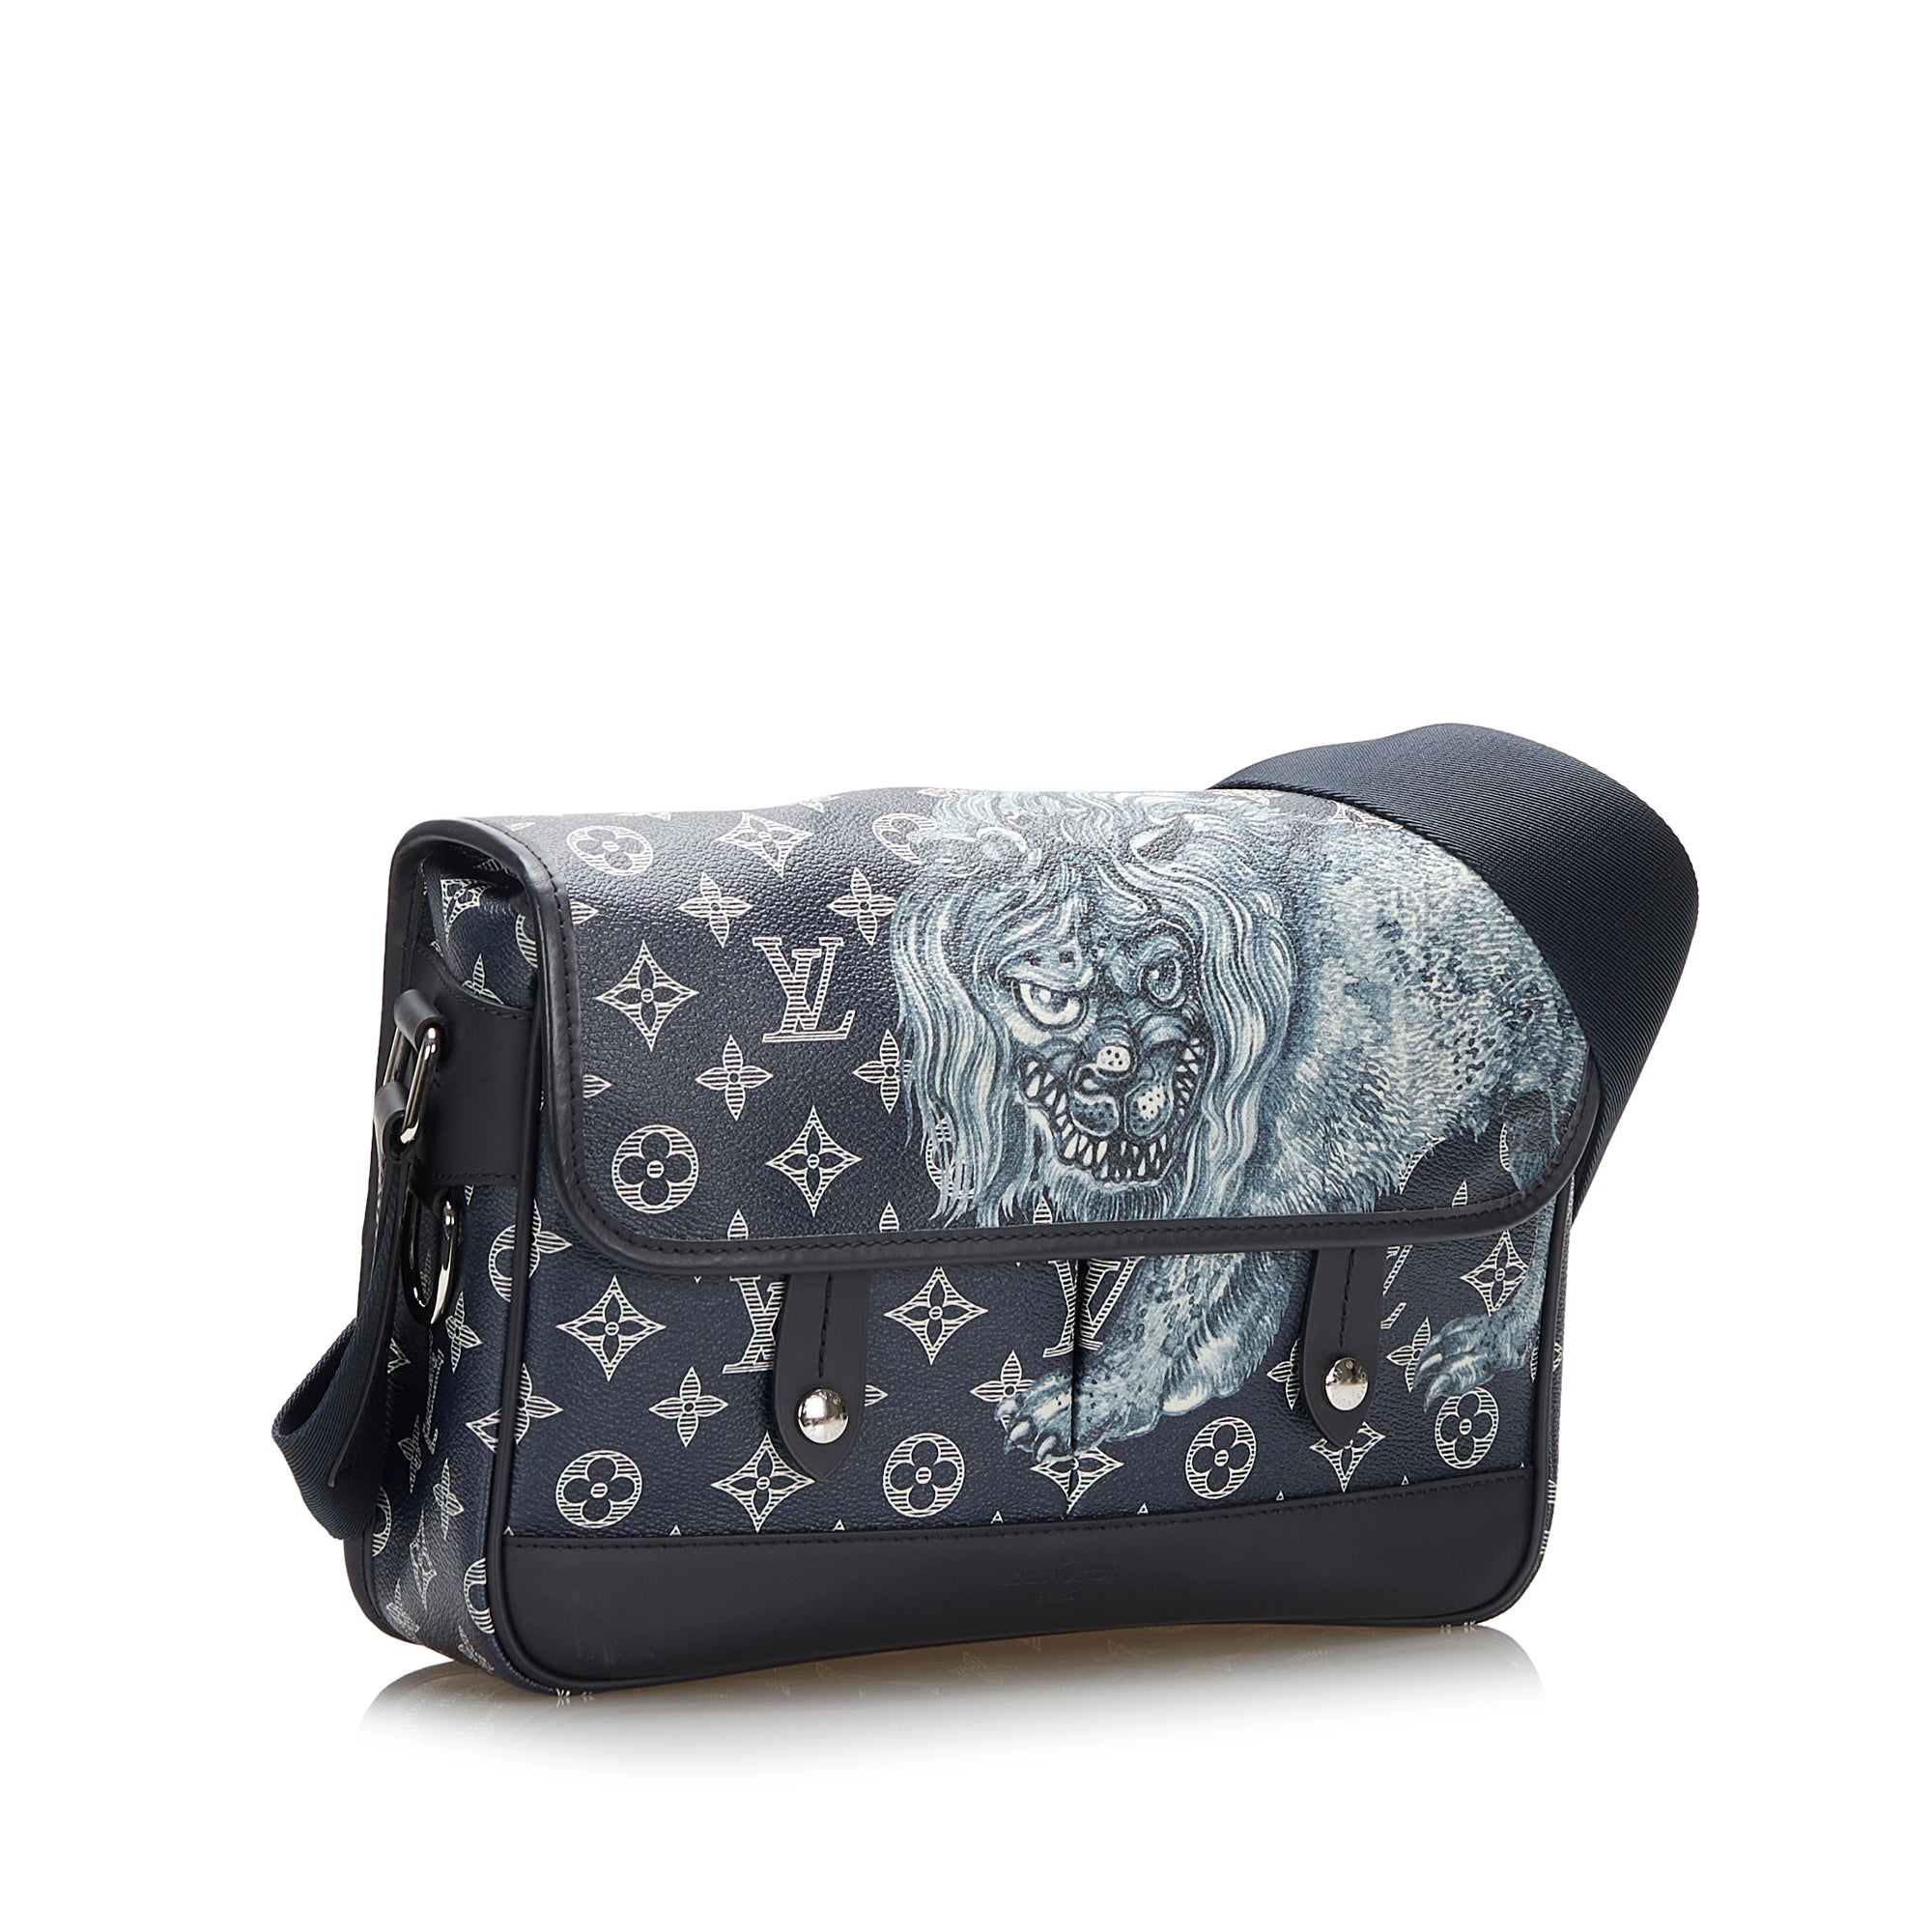 Louis Vuitton Monogram Chapman Brothers Handbag